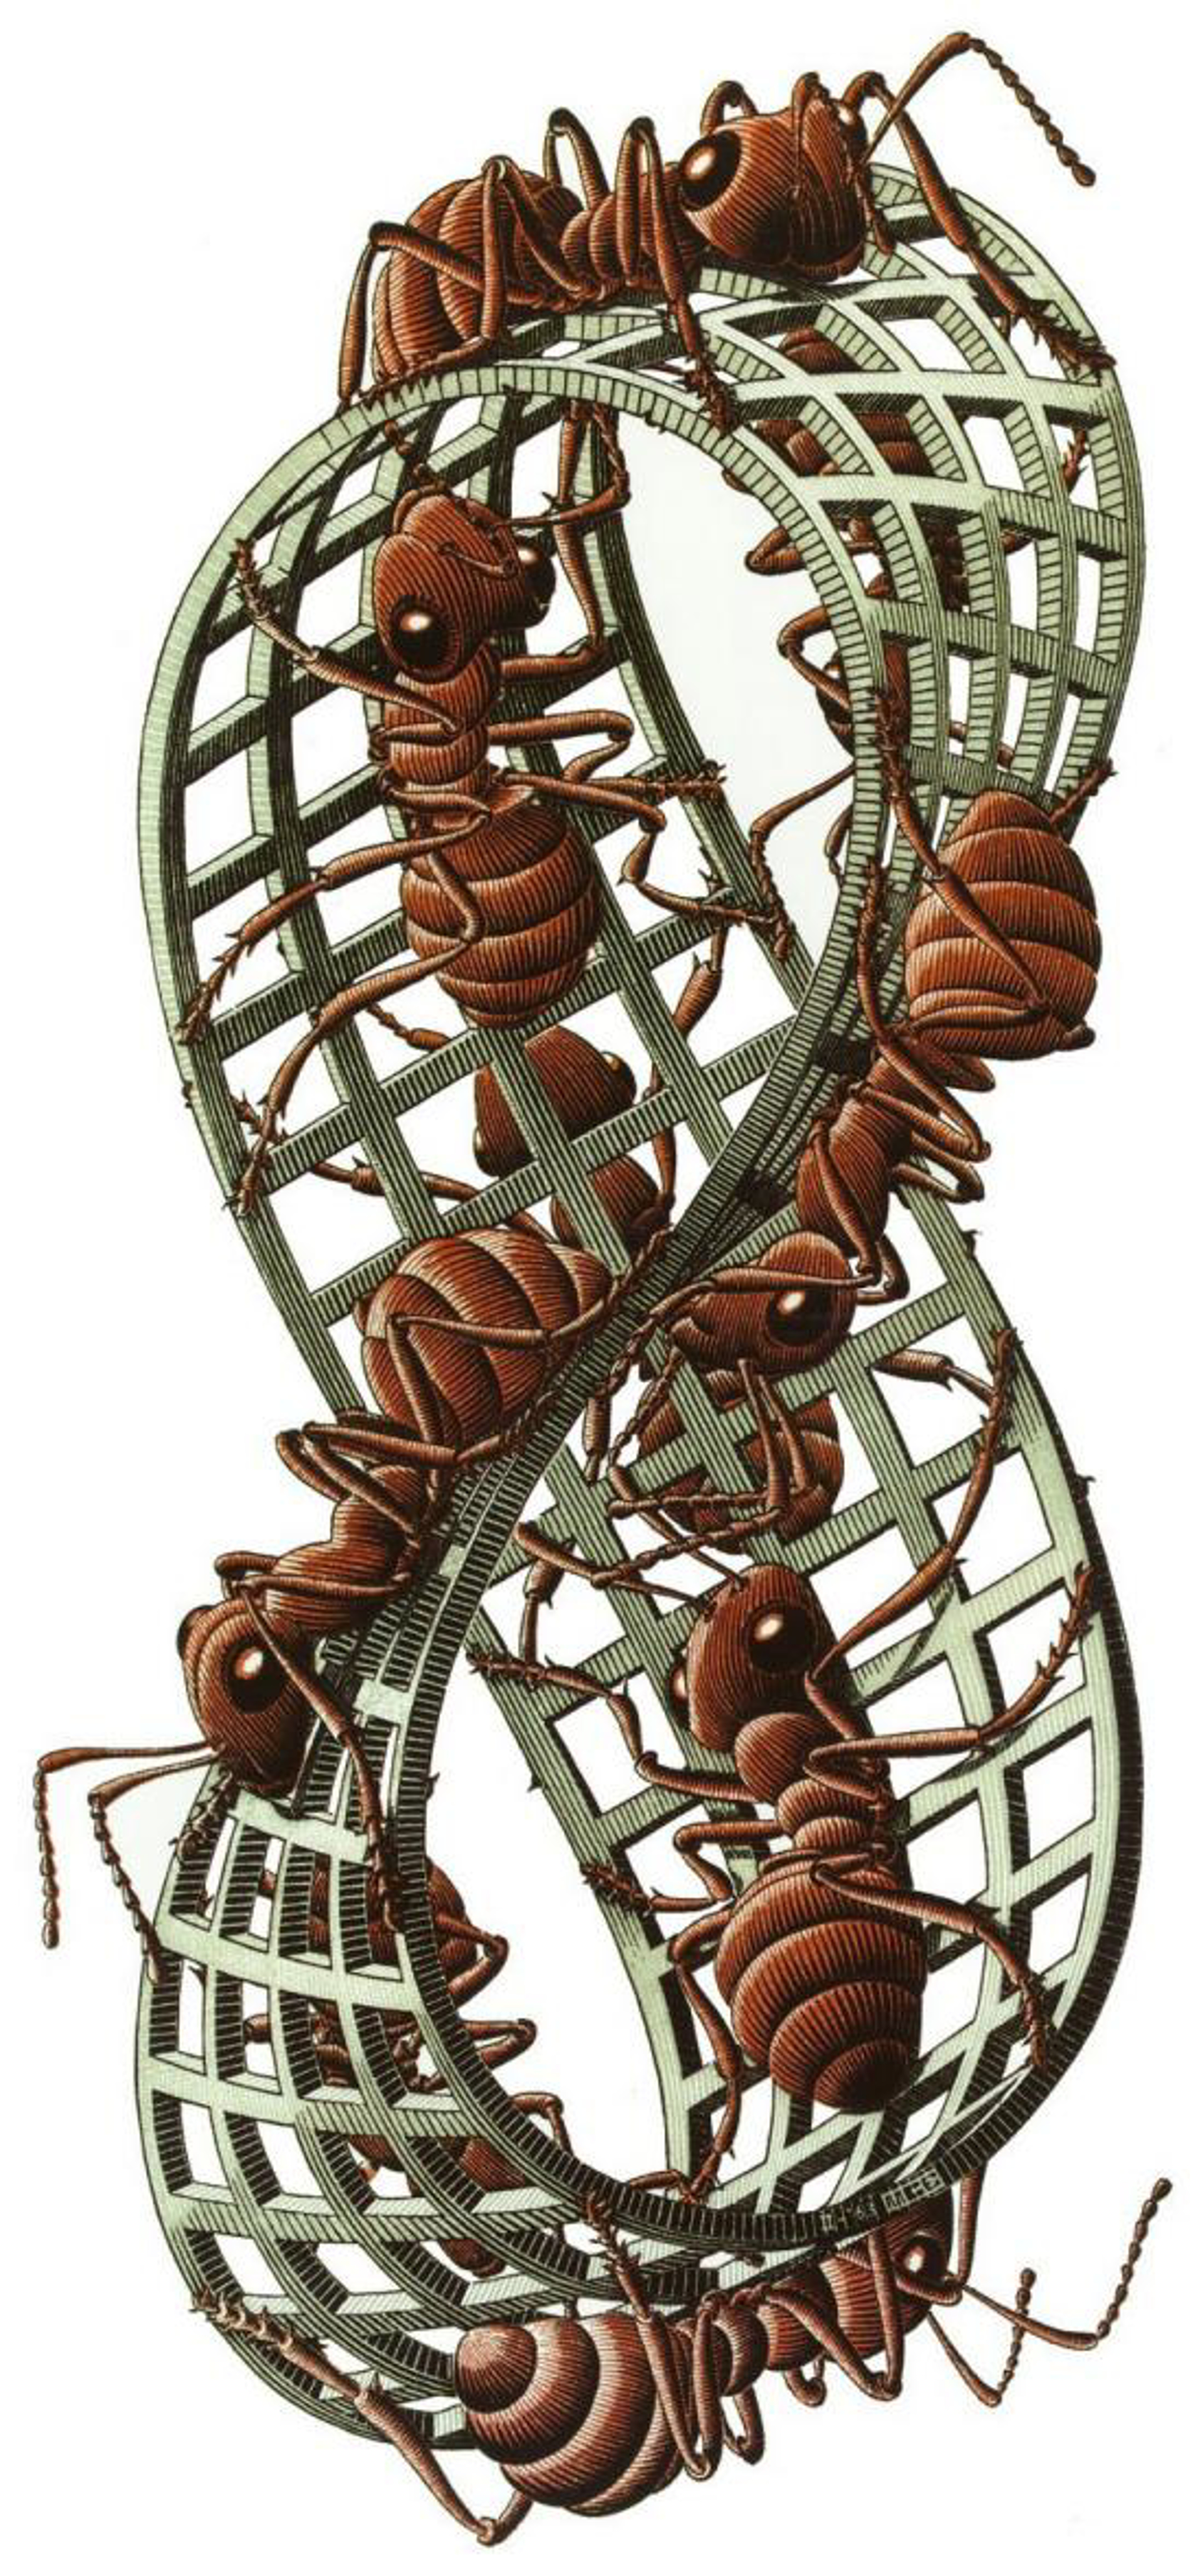 Mobius Strip II (Red Ants) by M.C. Escher